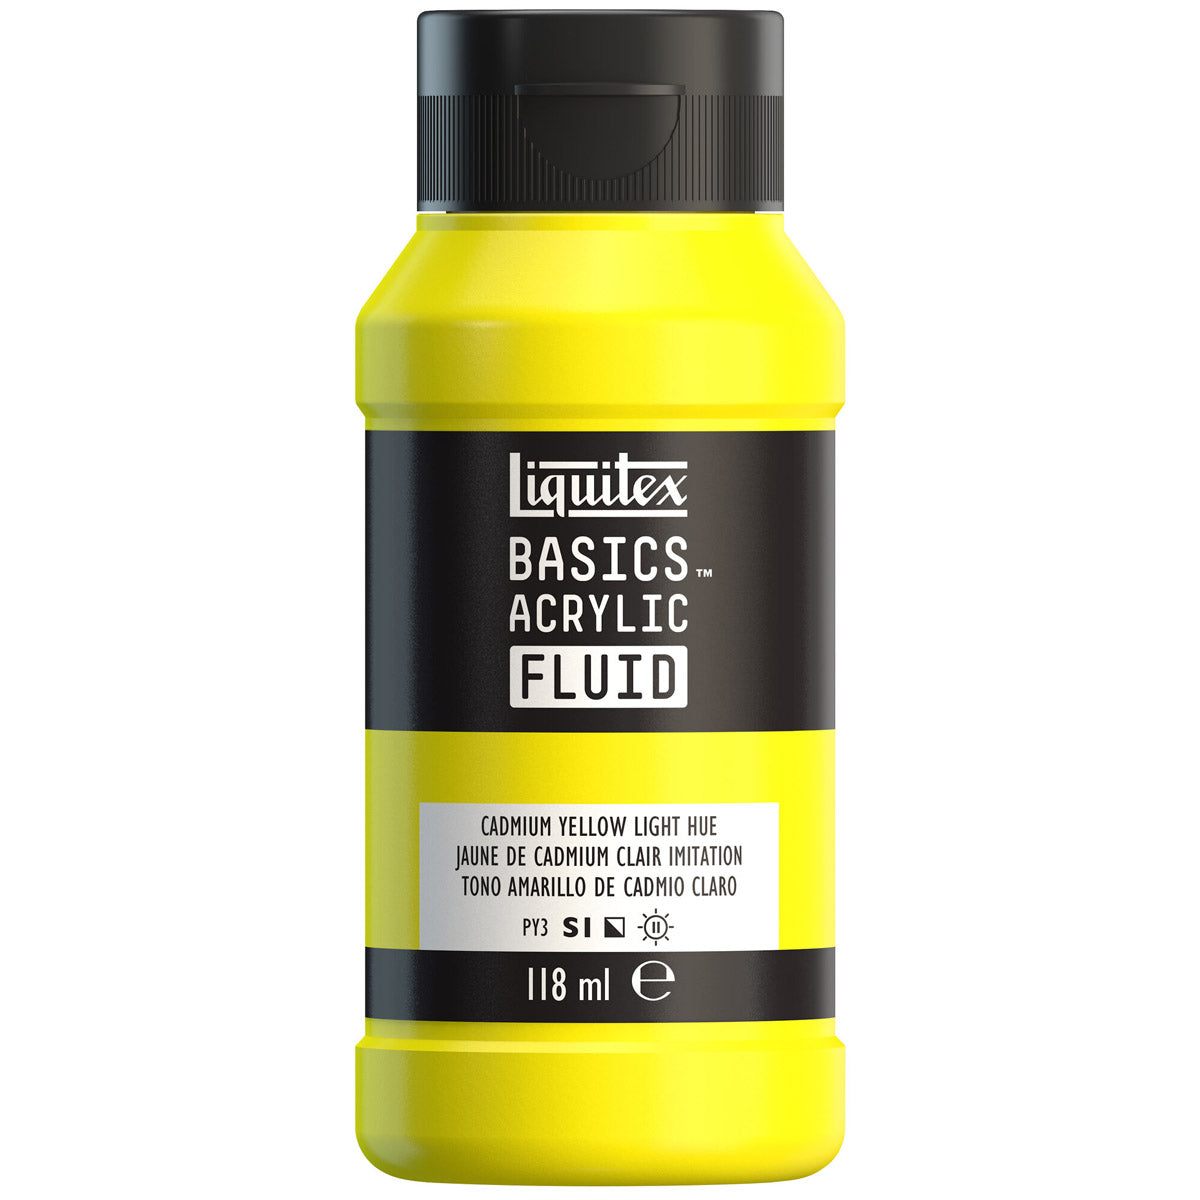 Liquitex Basics Fluid Acrylic 118ml - Cadmium Yellow Light Hue S1